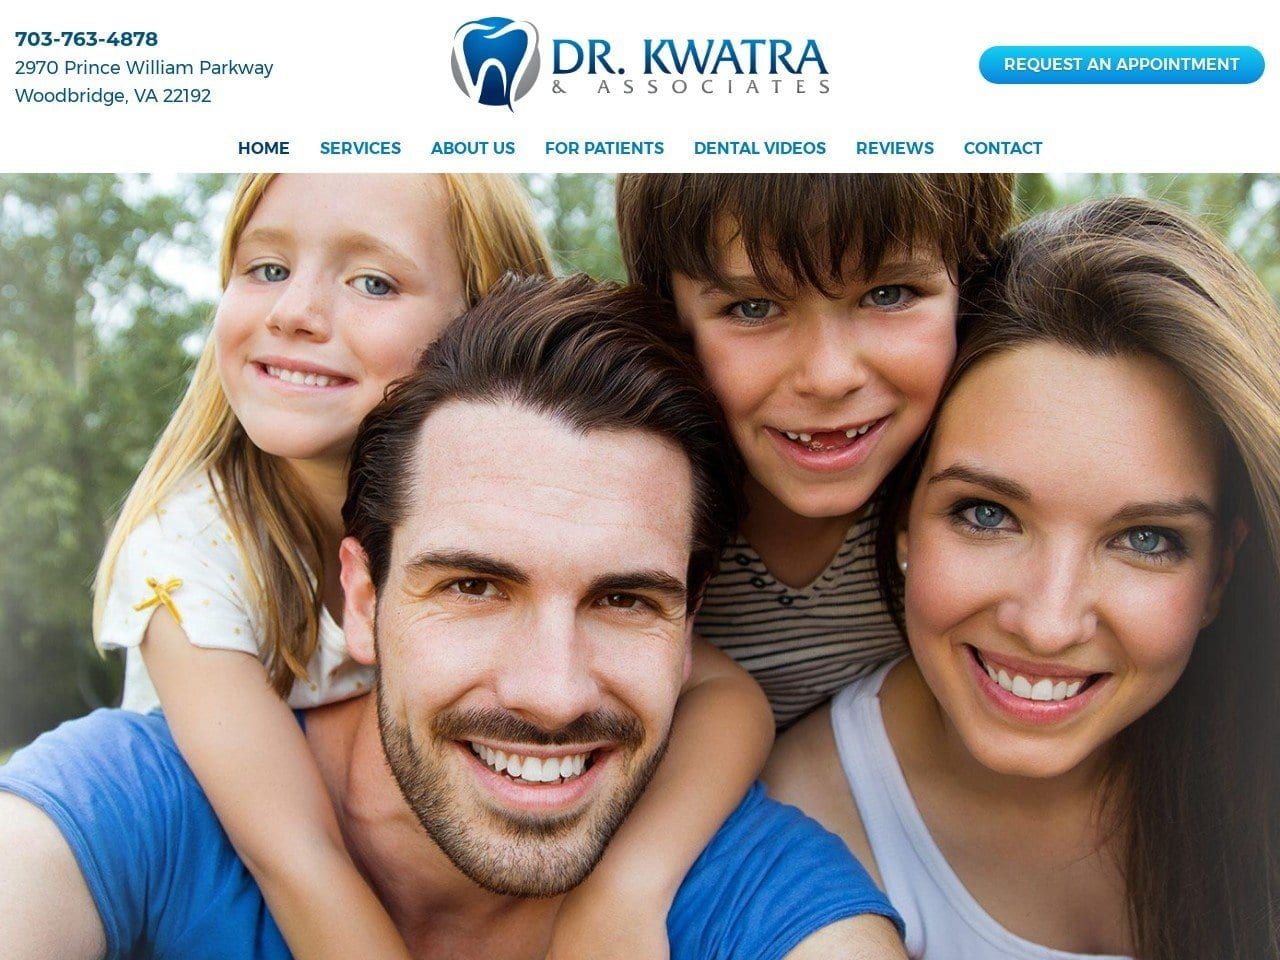 Dr. Kwatra Dentist Website Screenshot from novadentalteam.com